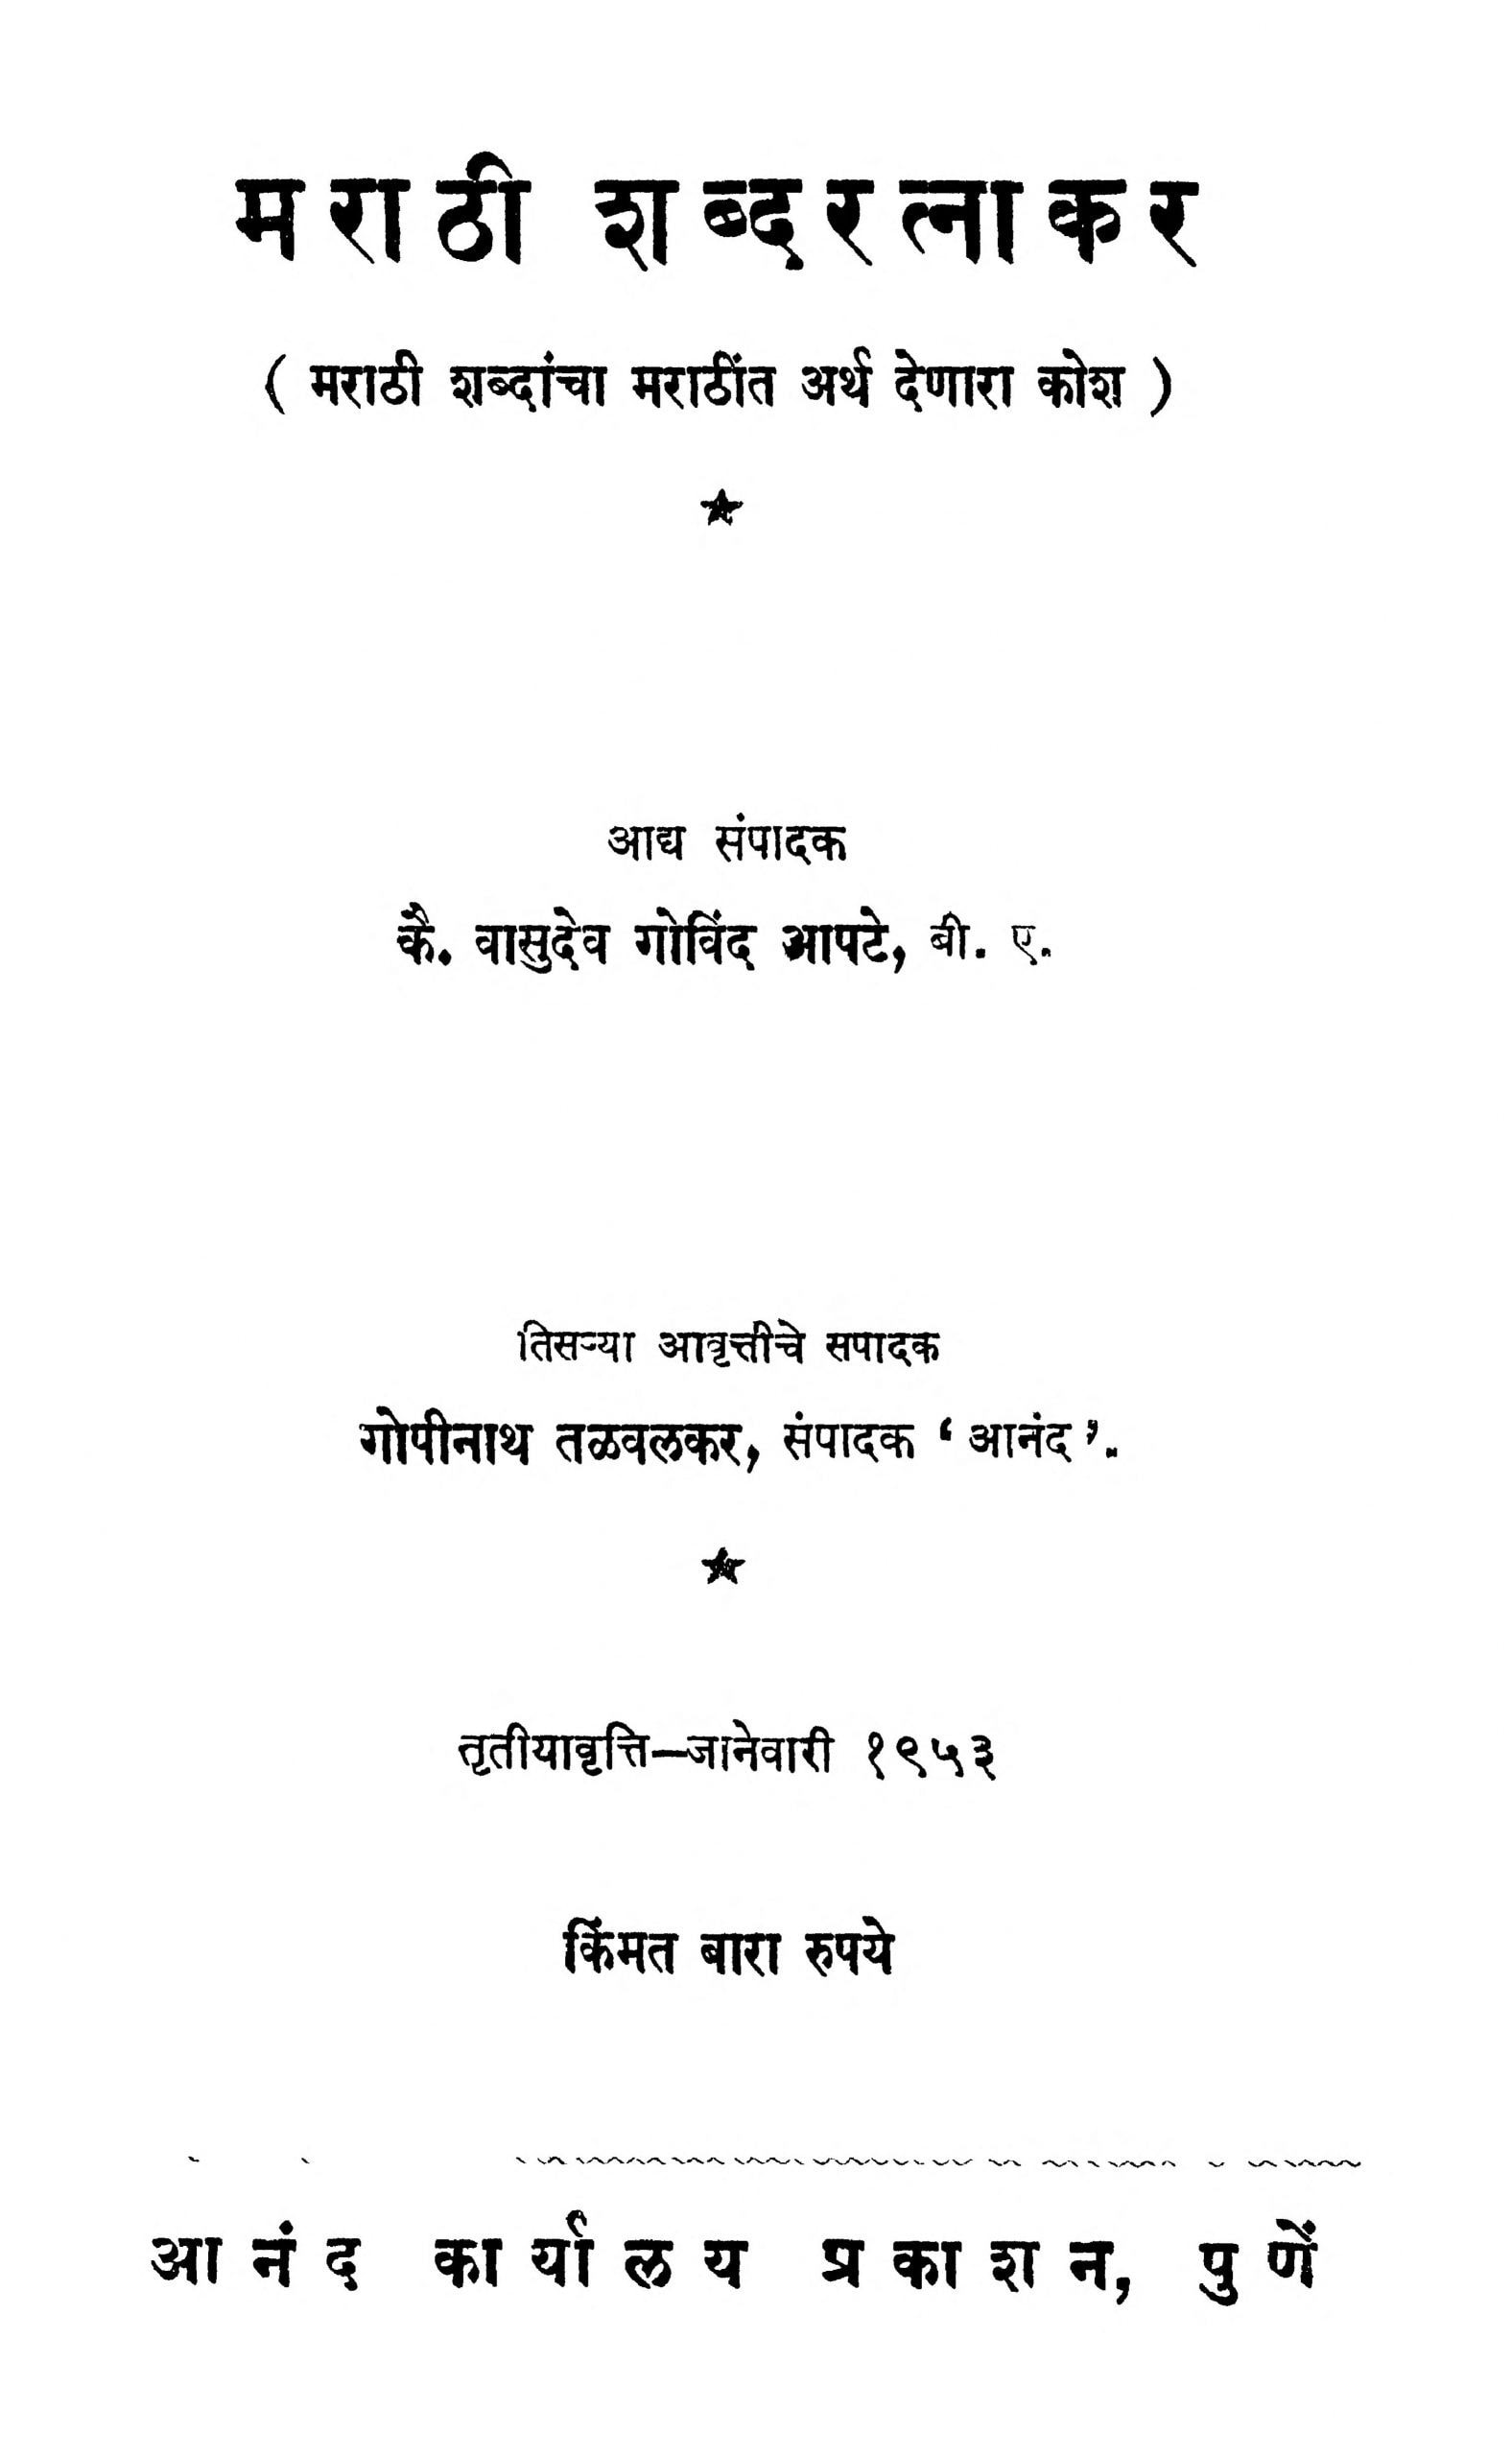 maraathii-shabdaratnaakar-by-gopinath-talvalkar-vasudev-govind-aapate-scaled-2